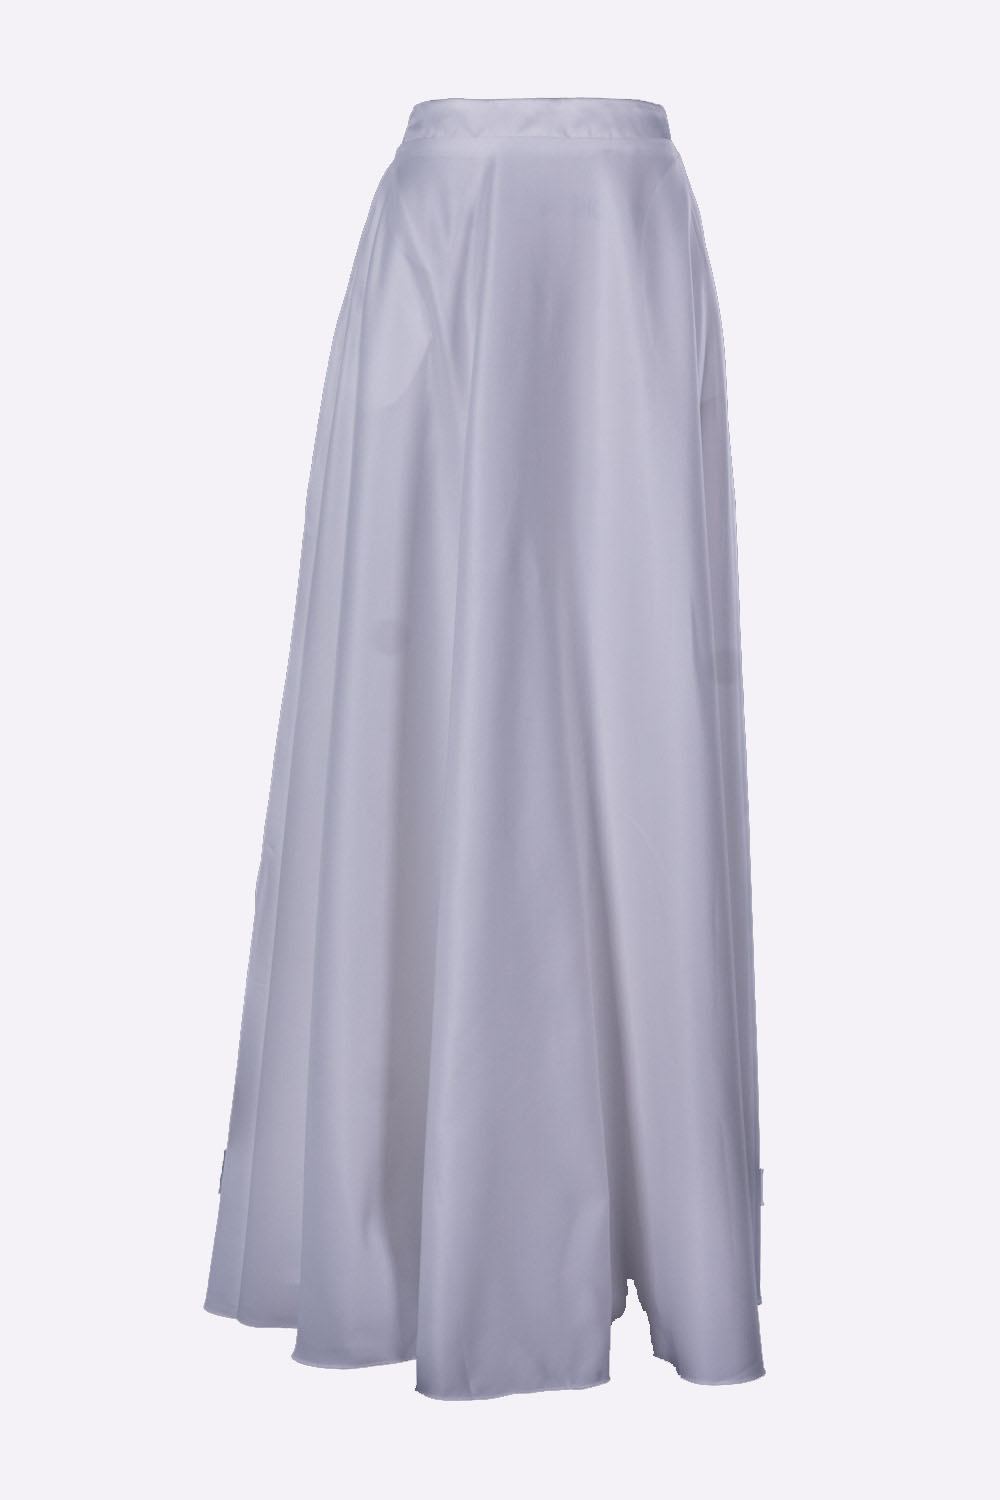 Poly USA SK10 - Long Off White Satin Skirt Side Pockets